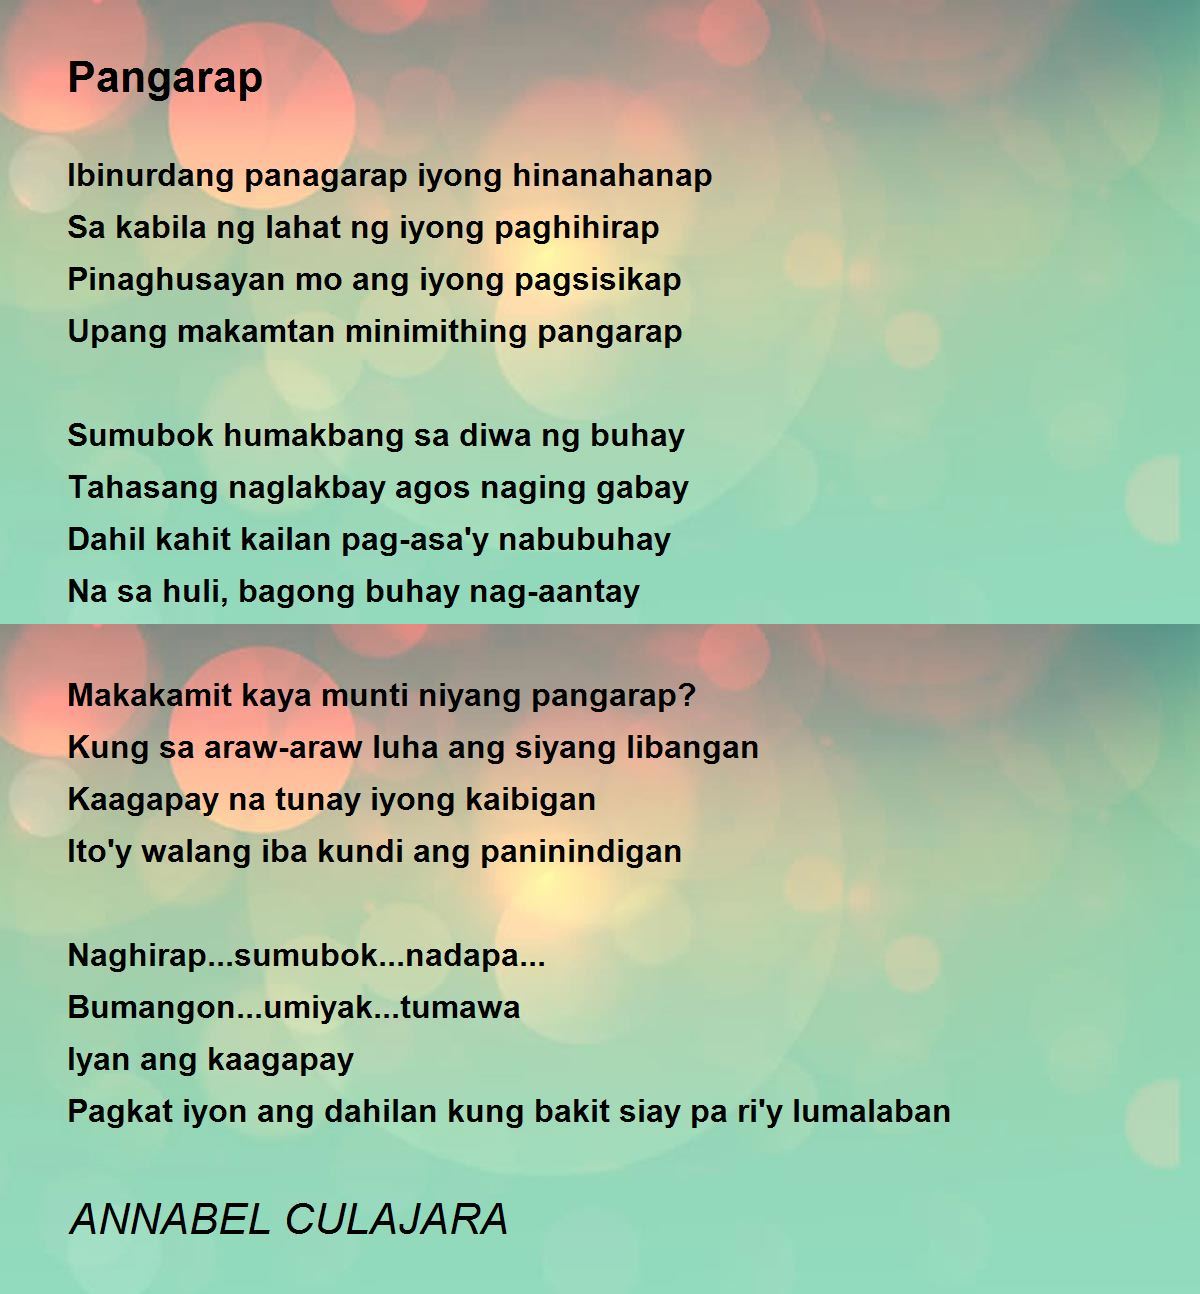 Pangarap - Pangarap Poem by ANNABEL CULAJARA